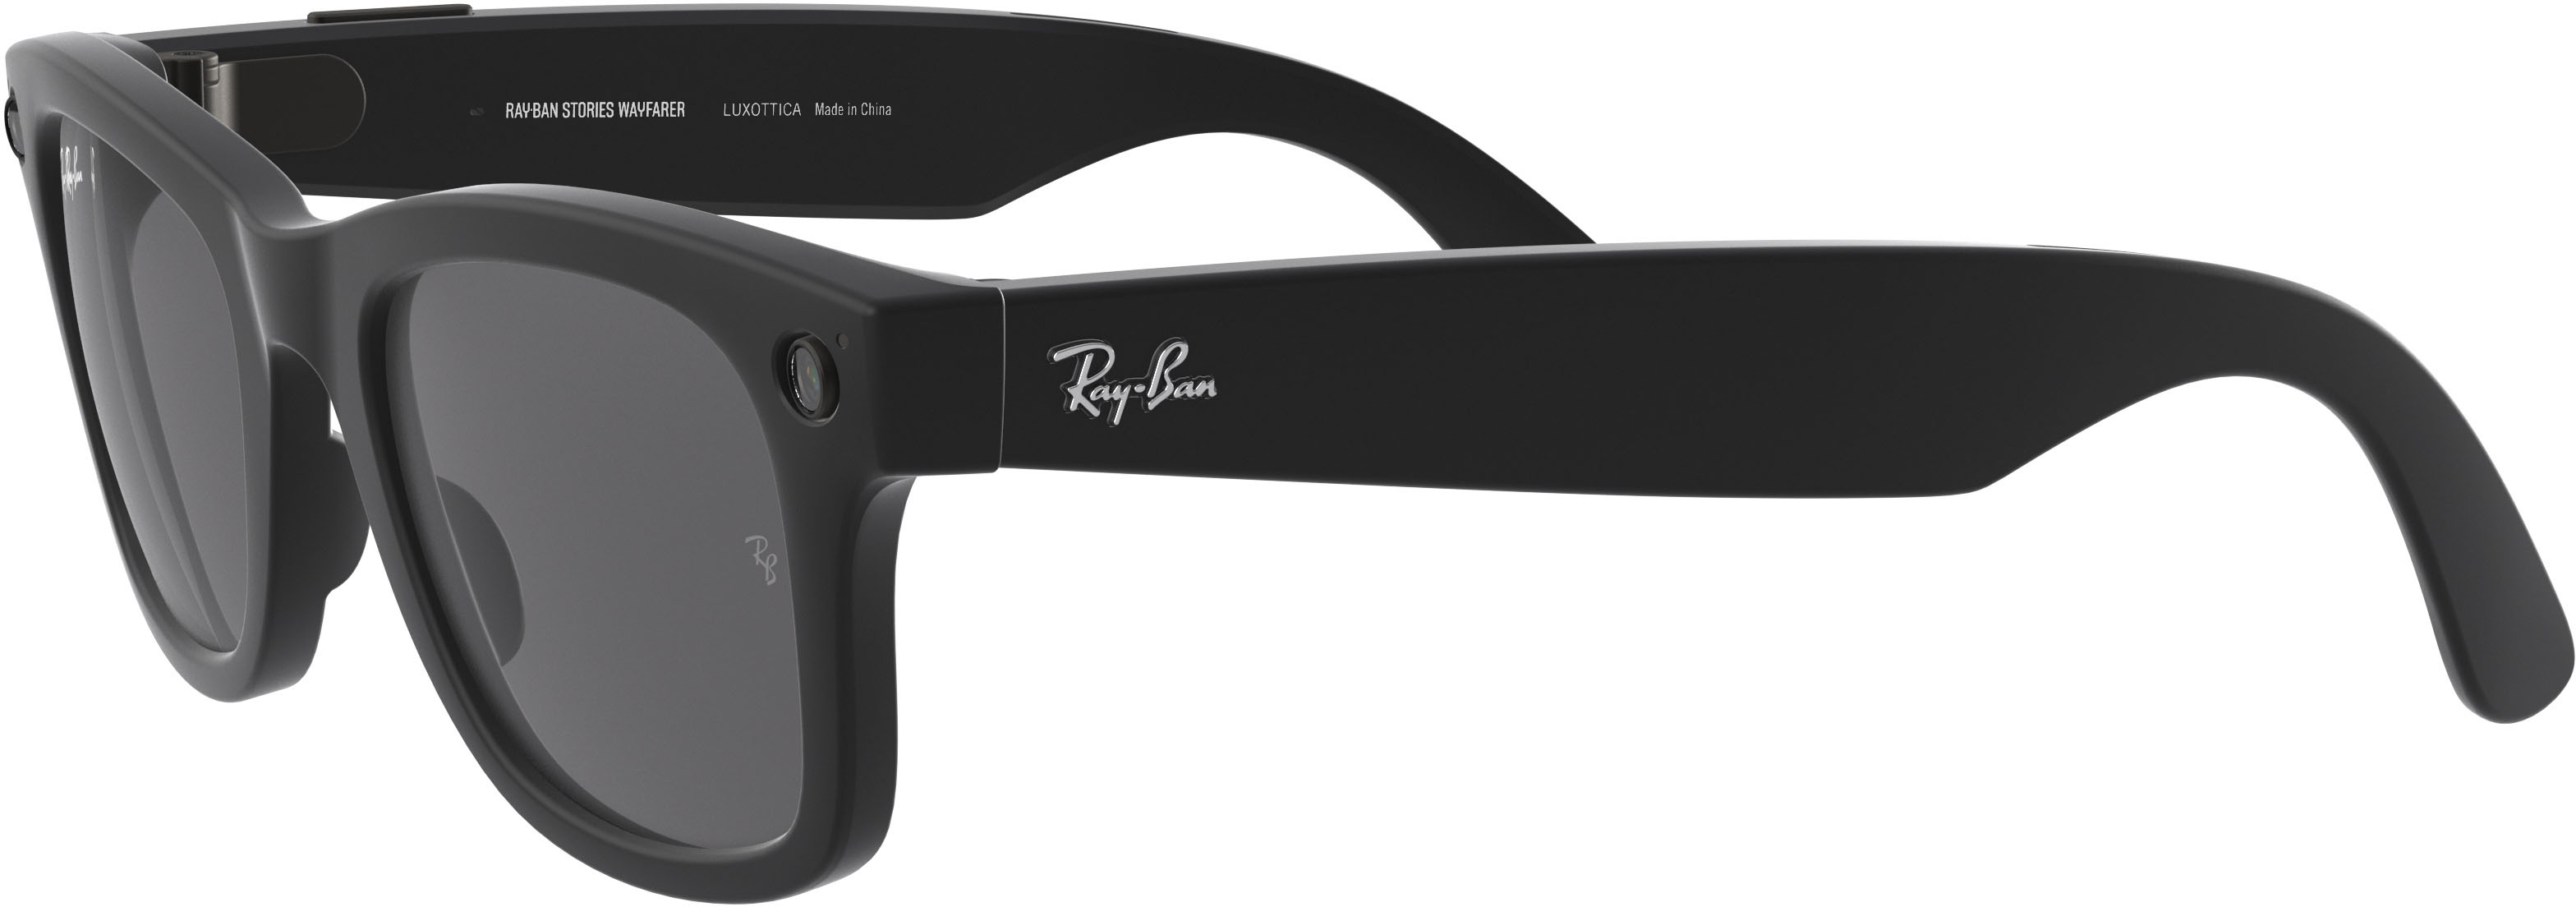 Left View: Ray-Ban - Stories Wayfarer Smart Glasses 50mm - Matte Black/Dark Grey